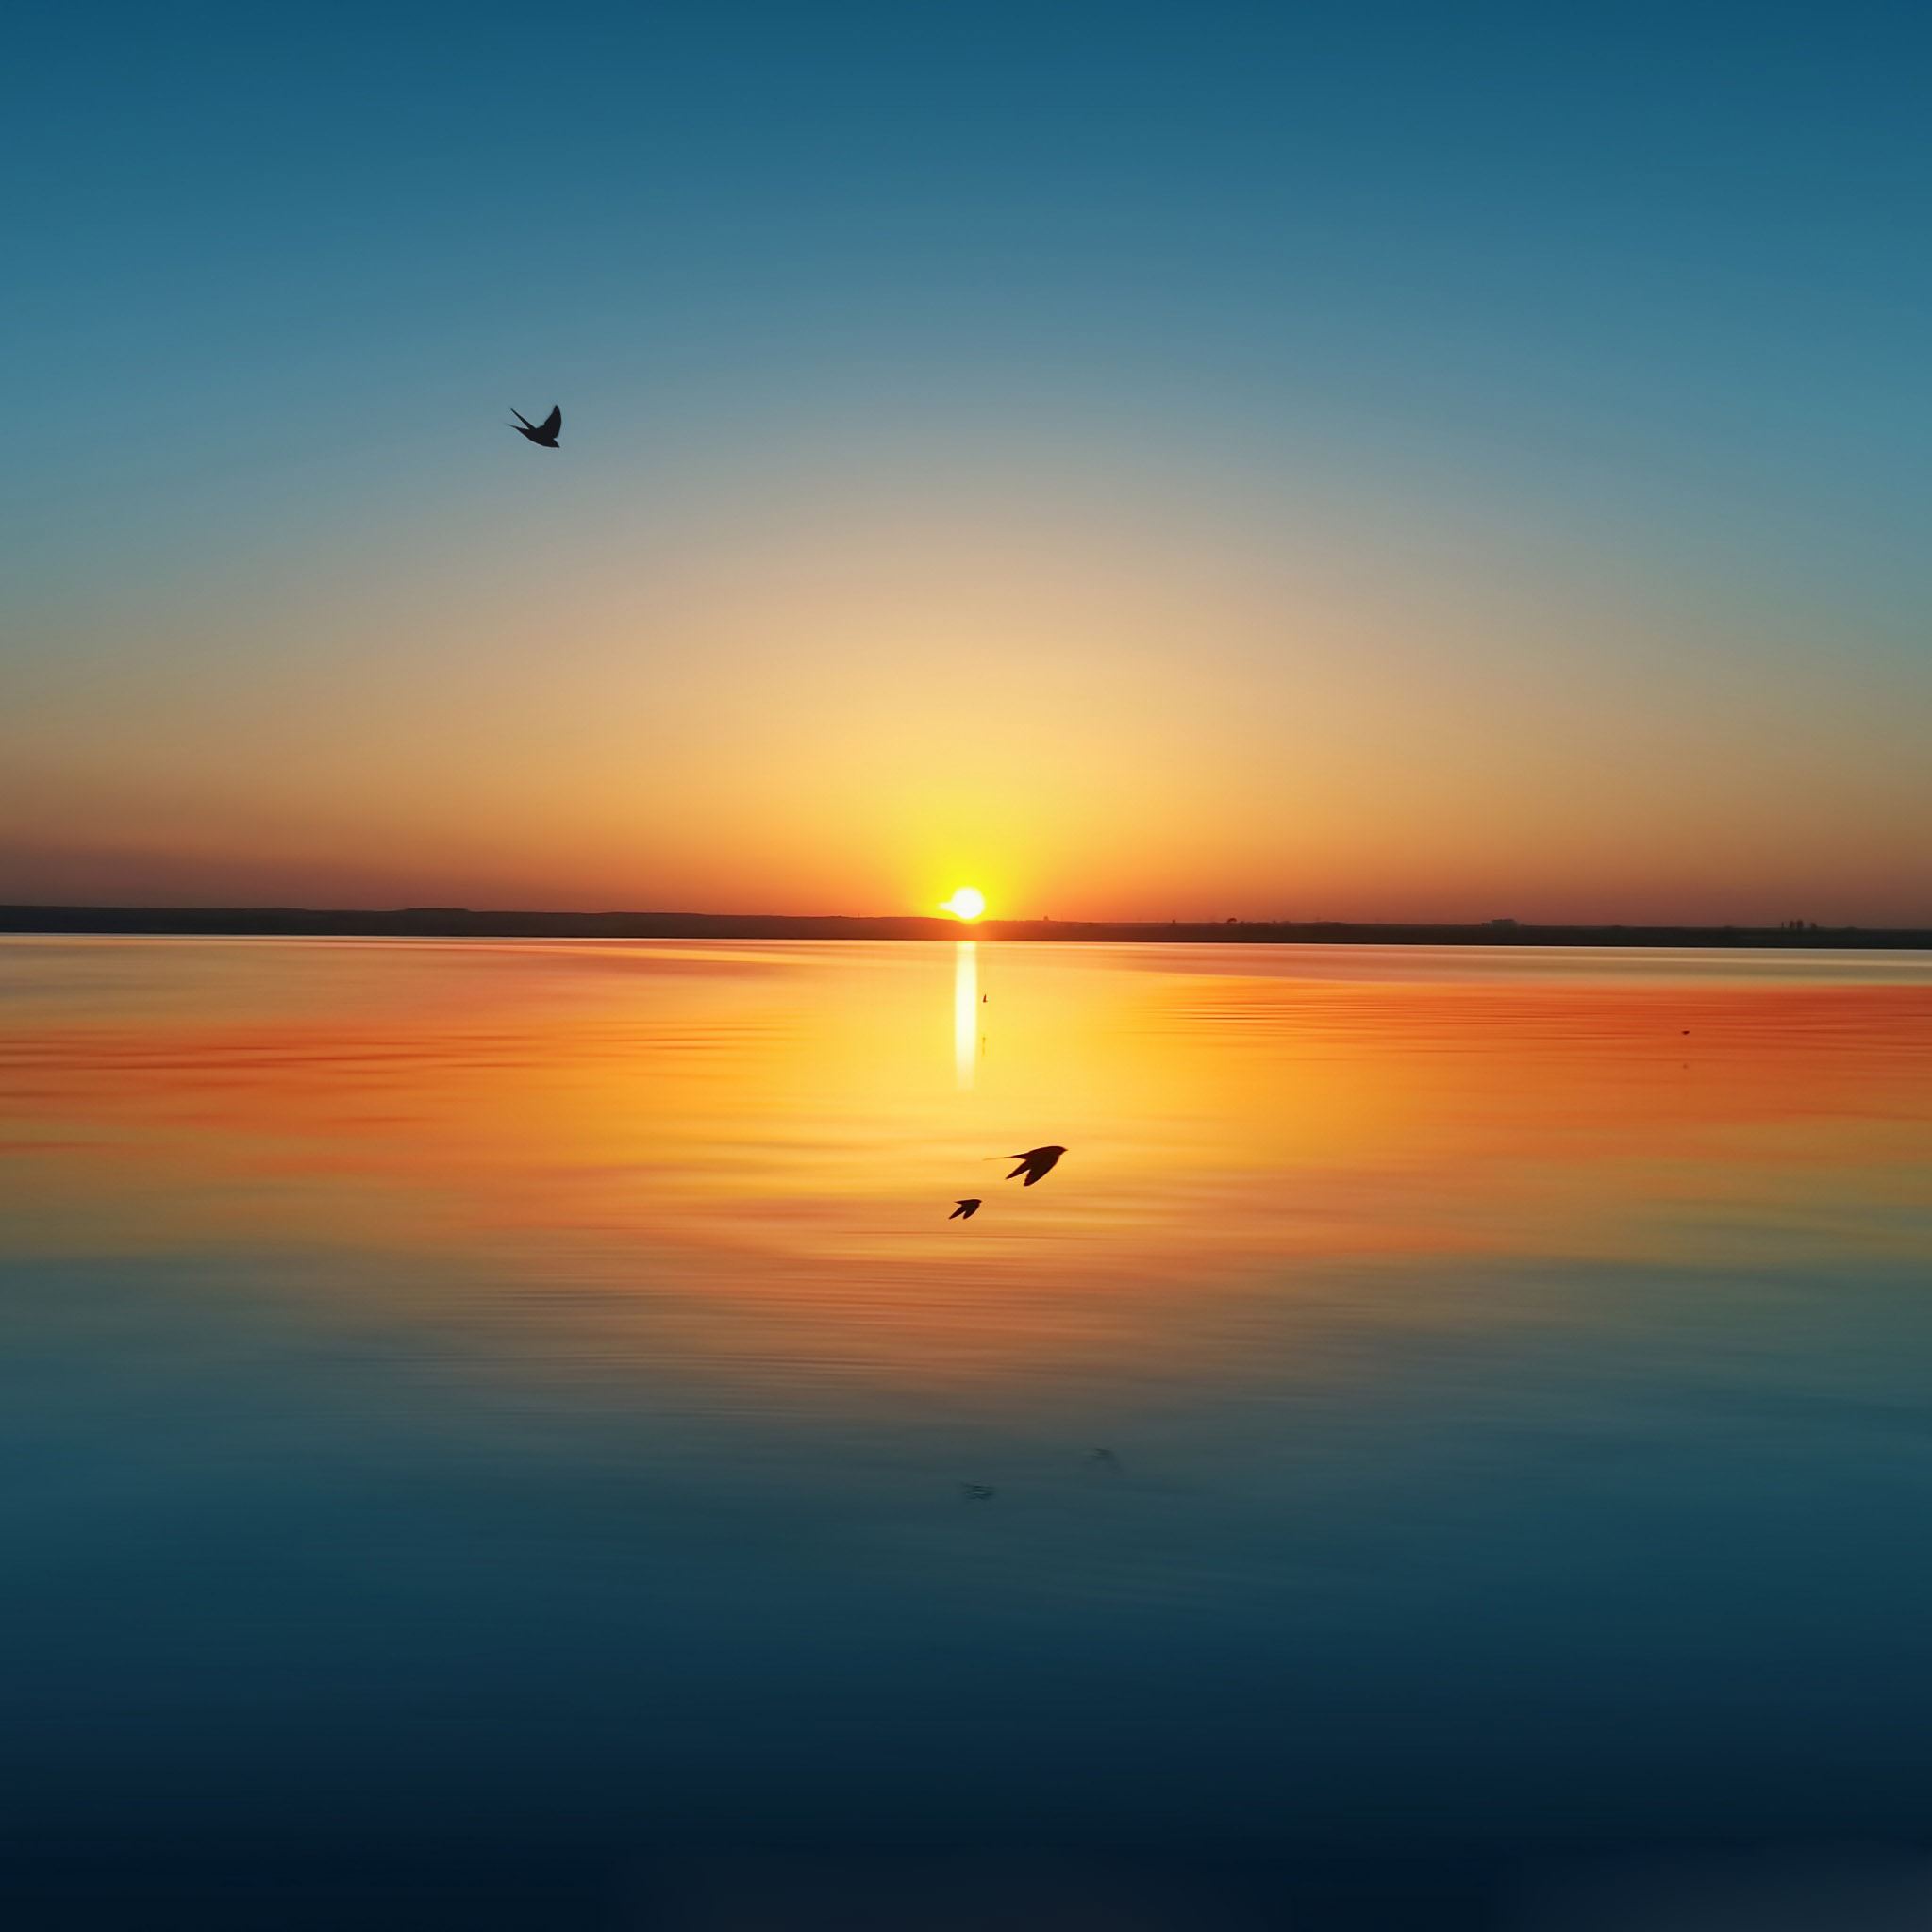 Sunset over lake iPad Air wallpaper 